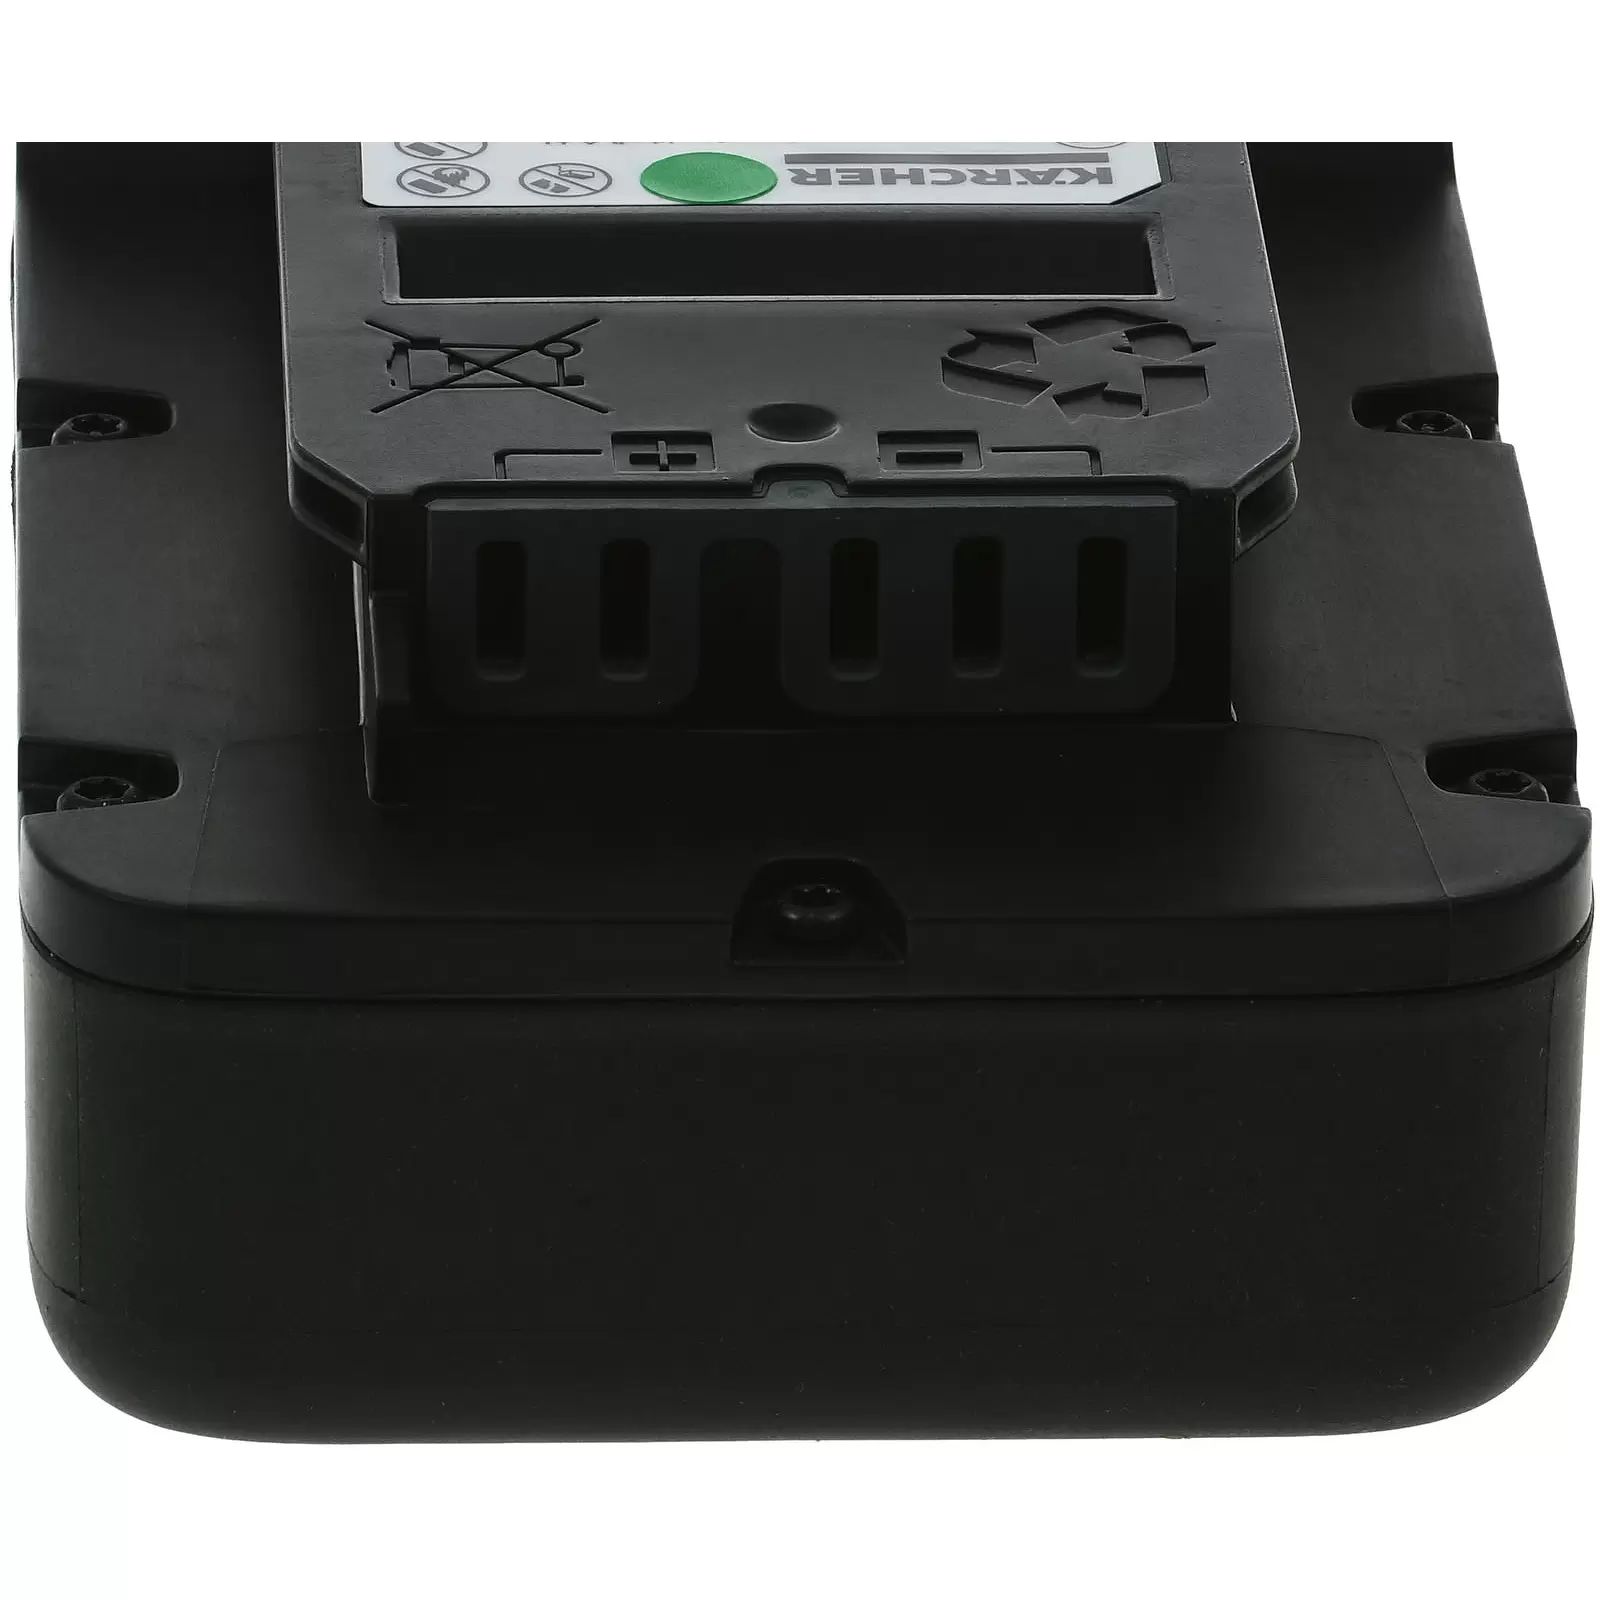 Kärcher Akku Battery Power 18/25 für alle Geräte der Kärcher 18V Battery Power Akkuplattform